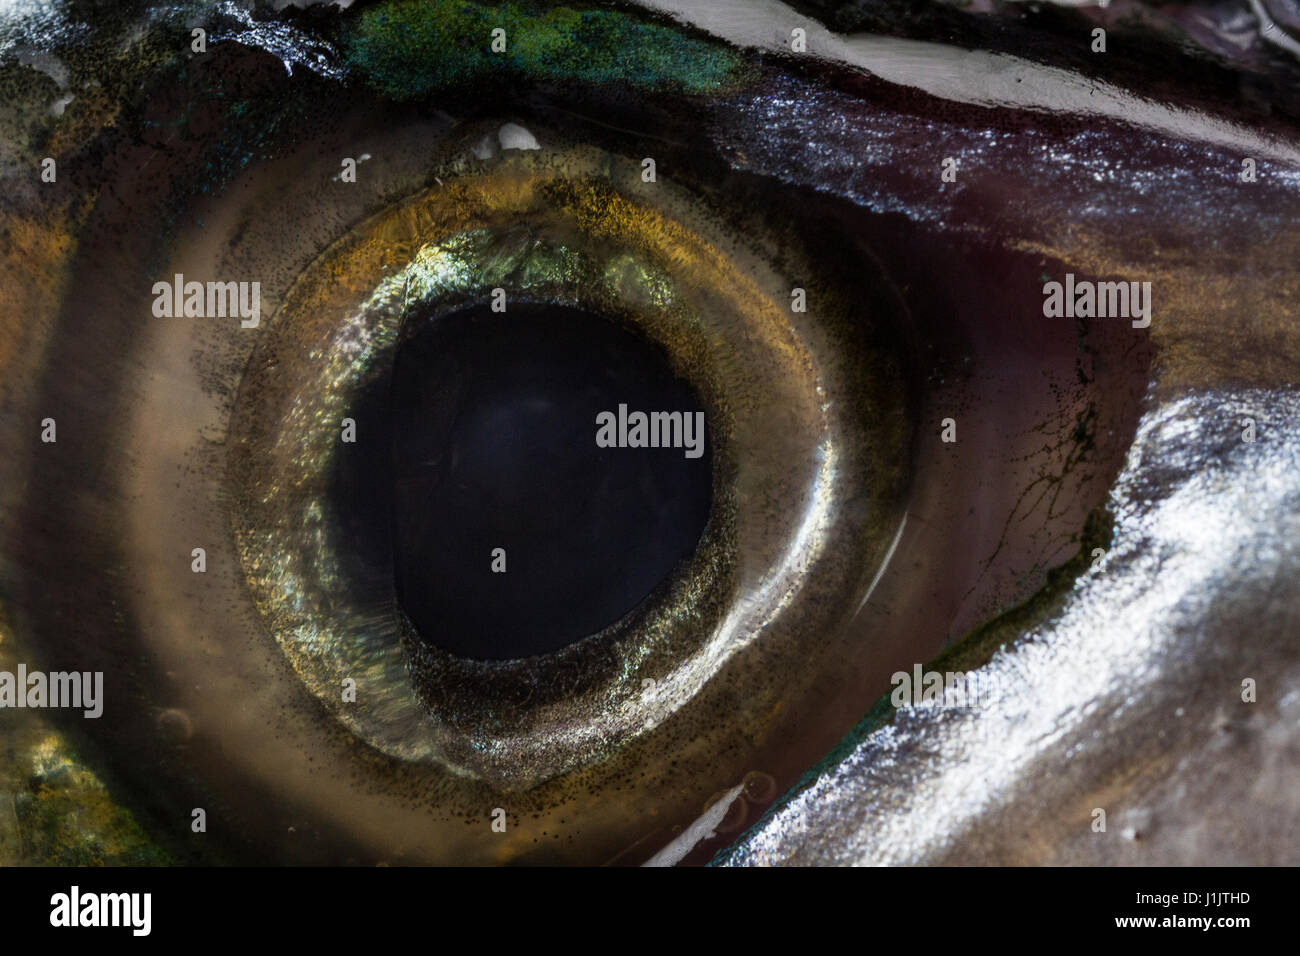 Macro eye of a Mackerel, fish close up, emotion Stock Photo